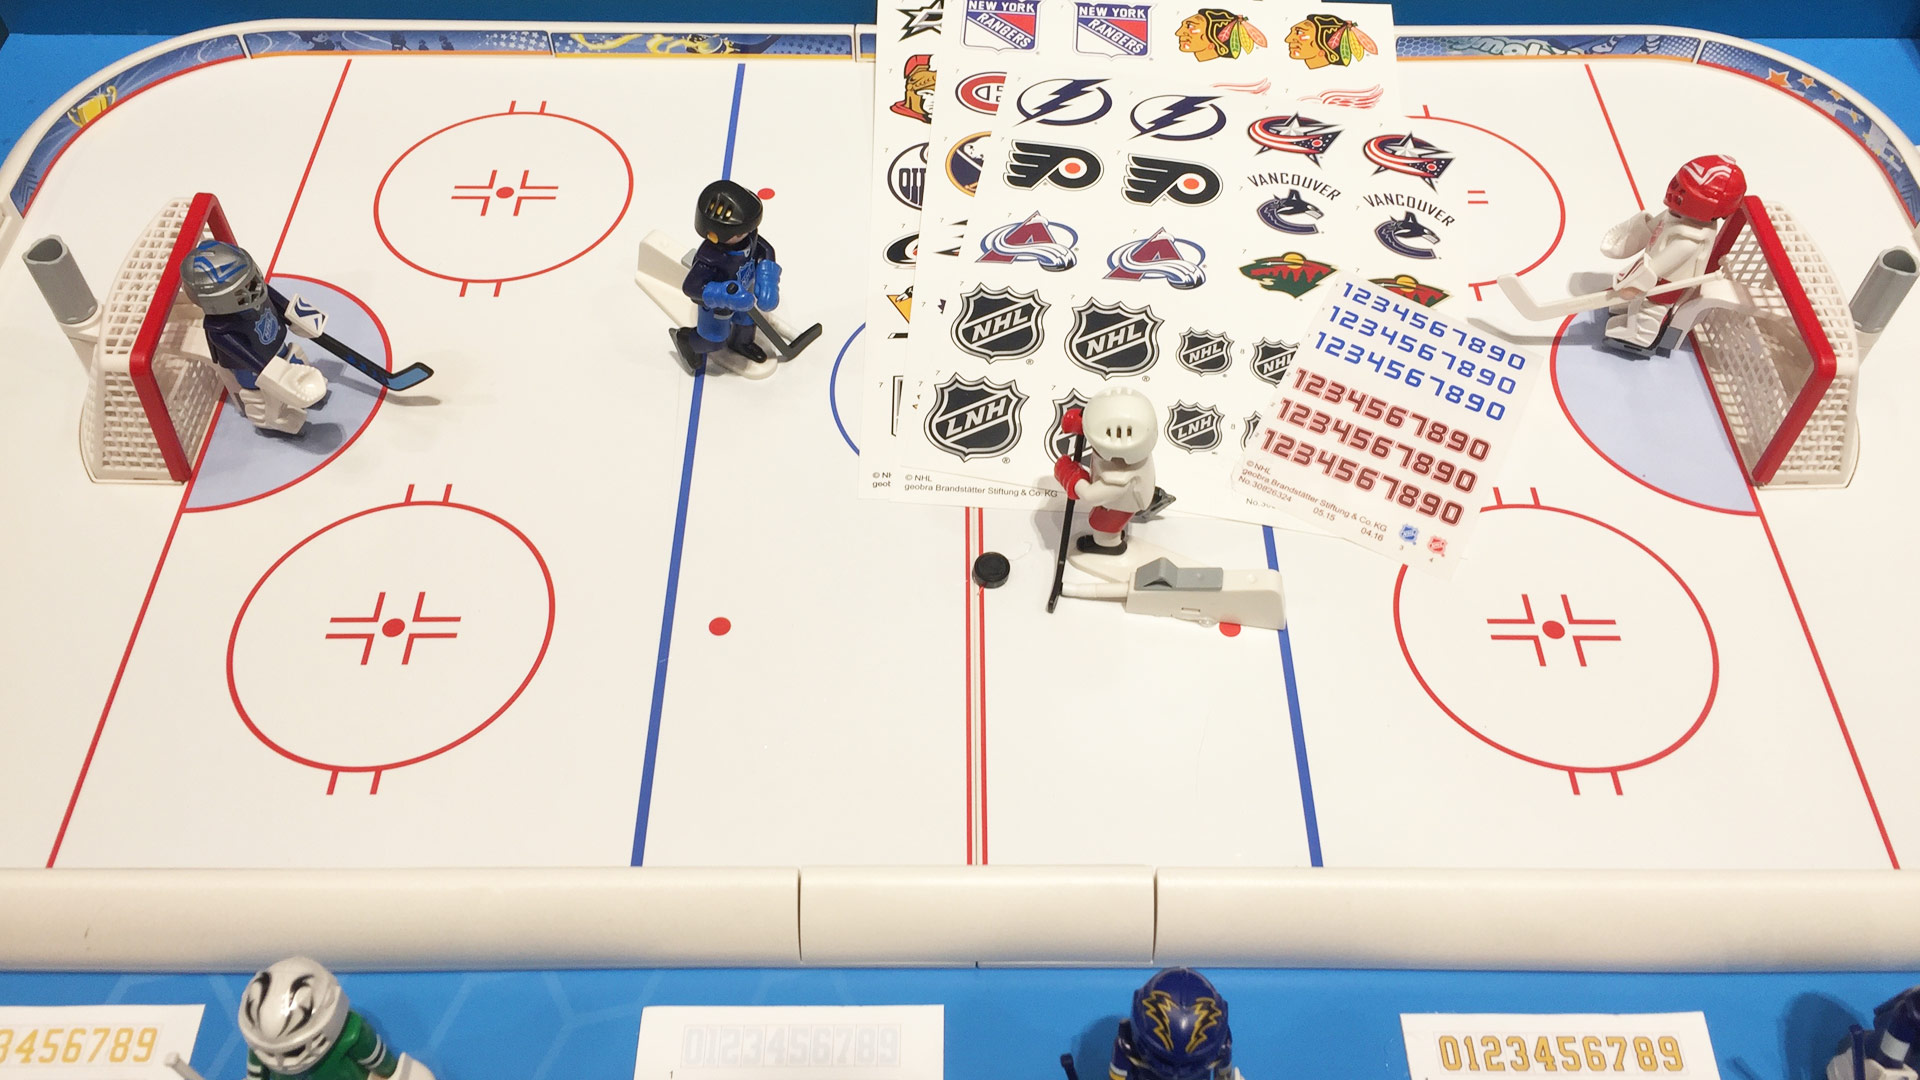 Playmobil Hockey NHL Set Rink and Goalies at Toy Fair 2017